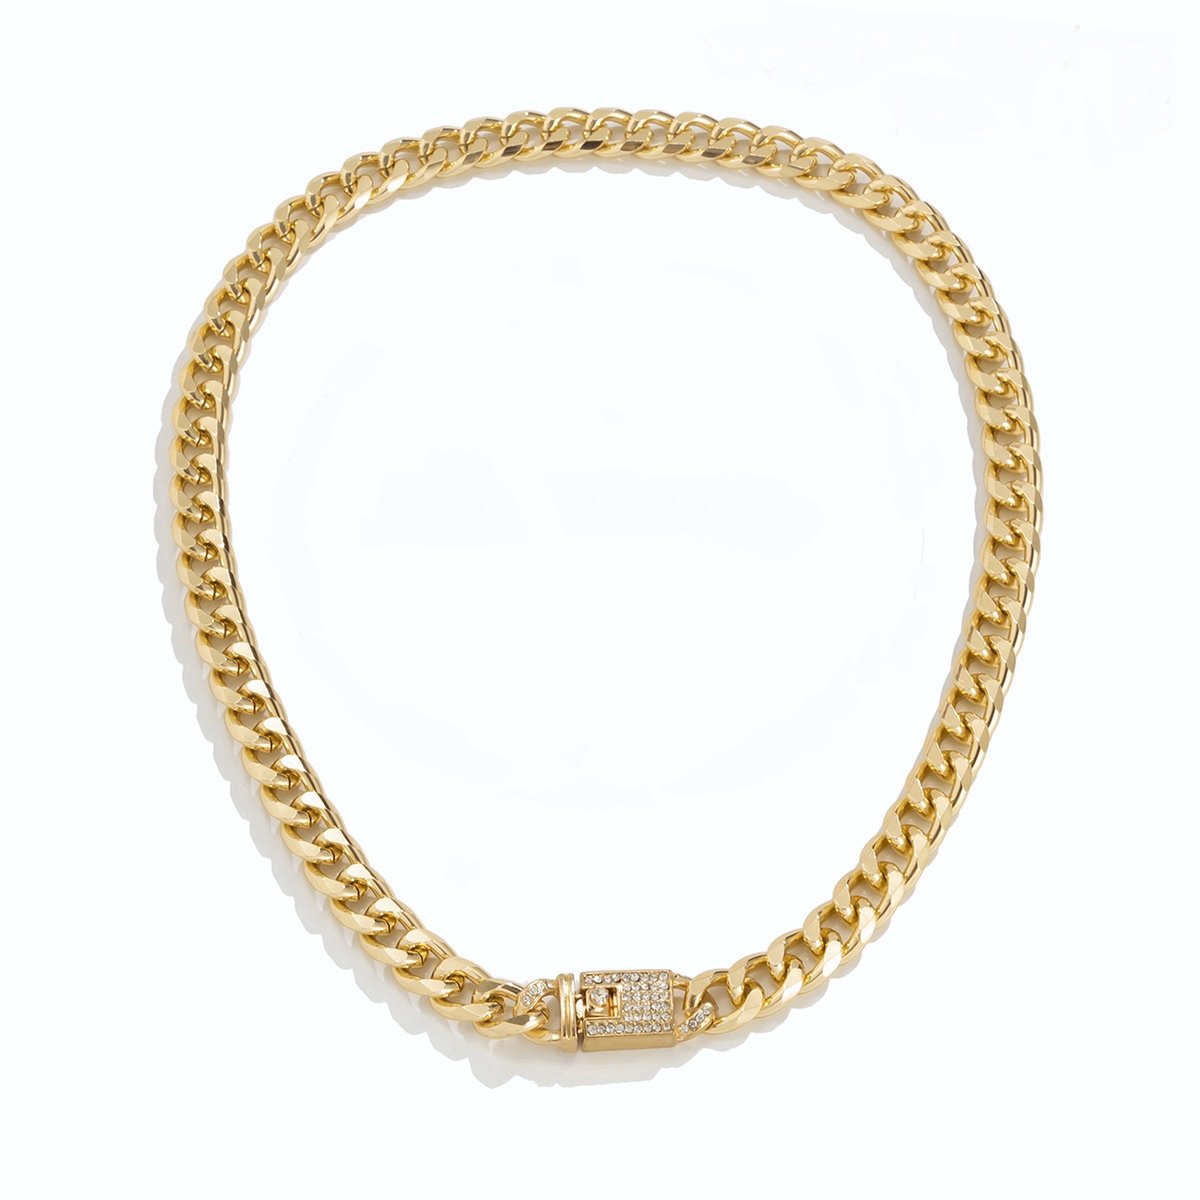 ICYBOY 18K Massieve Klassieke Heren Ketting Verguld Goud [GOLD-PLATED] [CLASSIC] [50 cm] - Cuban Link Chain Urban Necklace